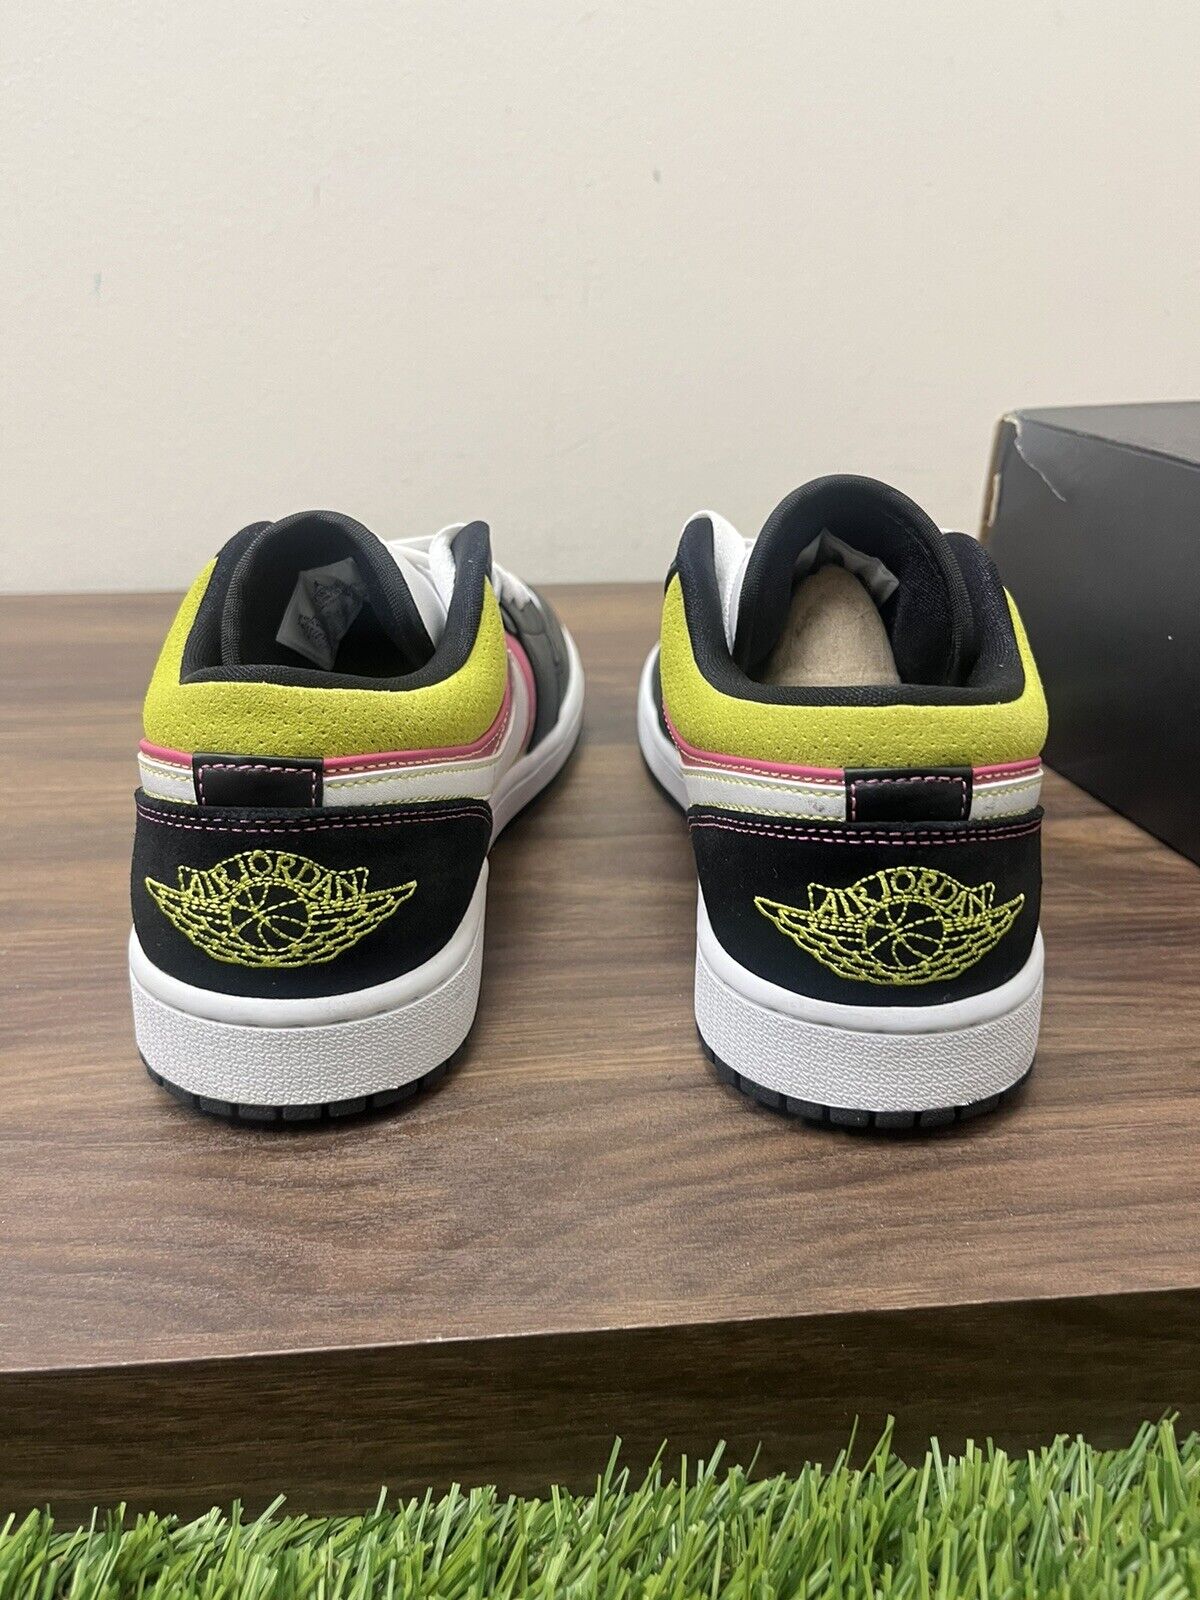 Nike Air Jordan 1 Men's Low Spray Paint CW5564-001 Sneakers Shoes size 8.5